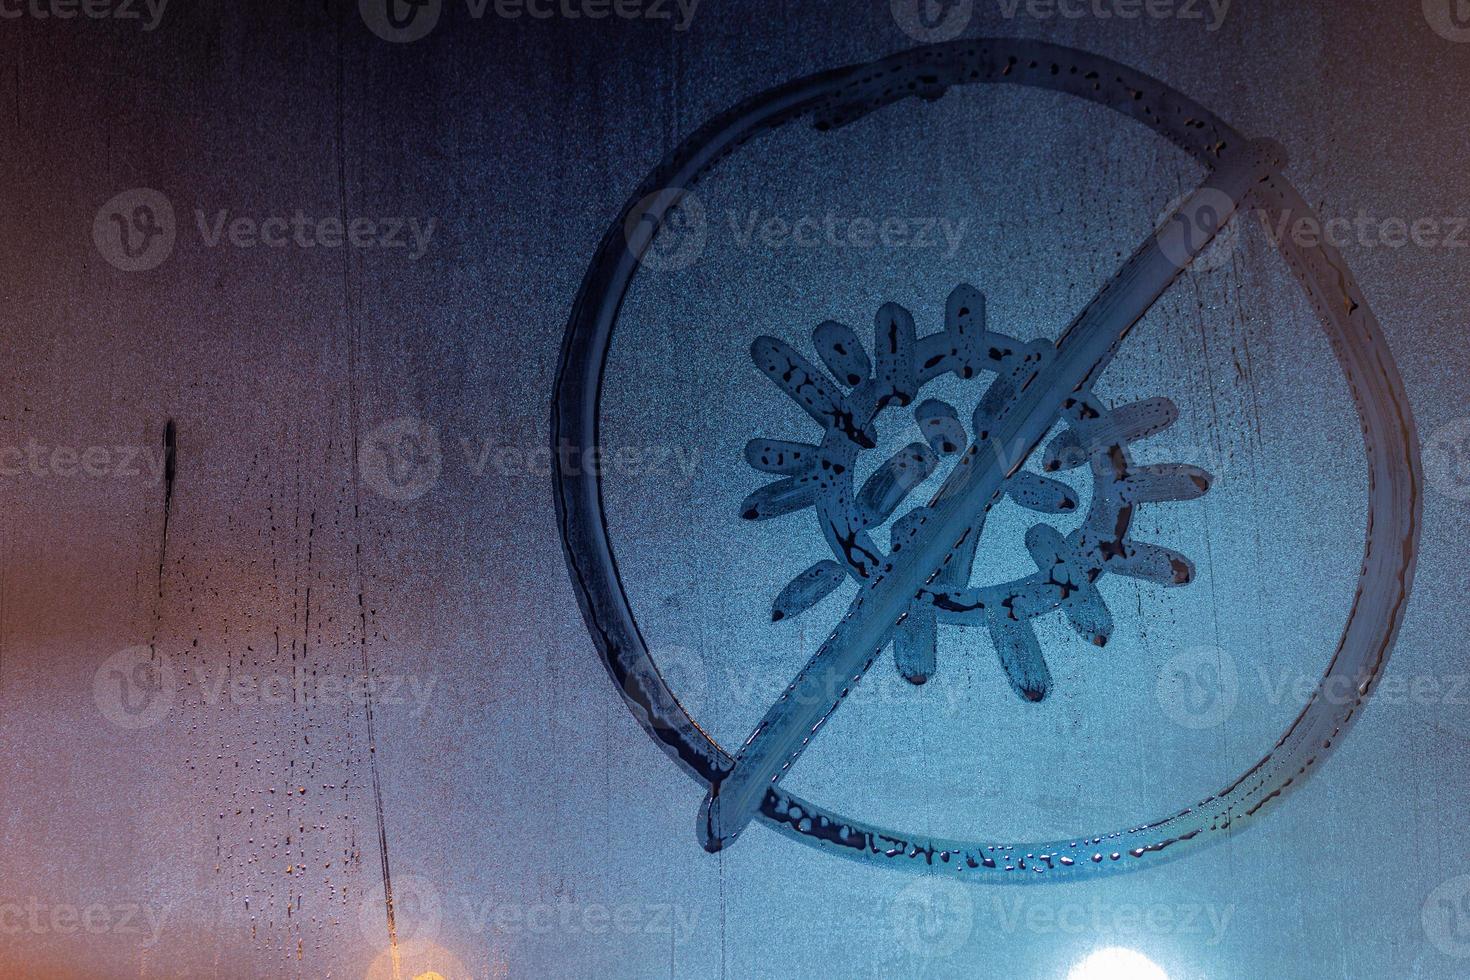 banned coronavirus icon handwritten on night wet window glass close-up photo